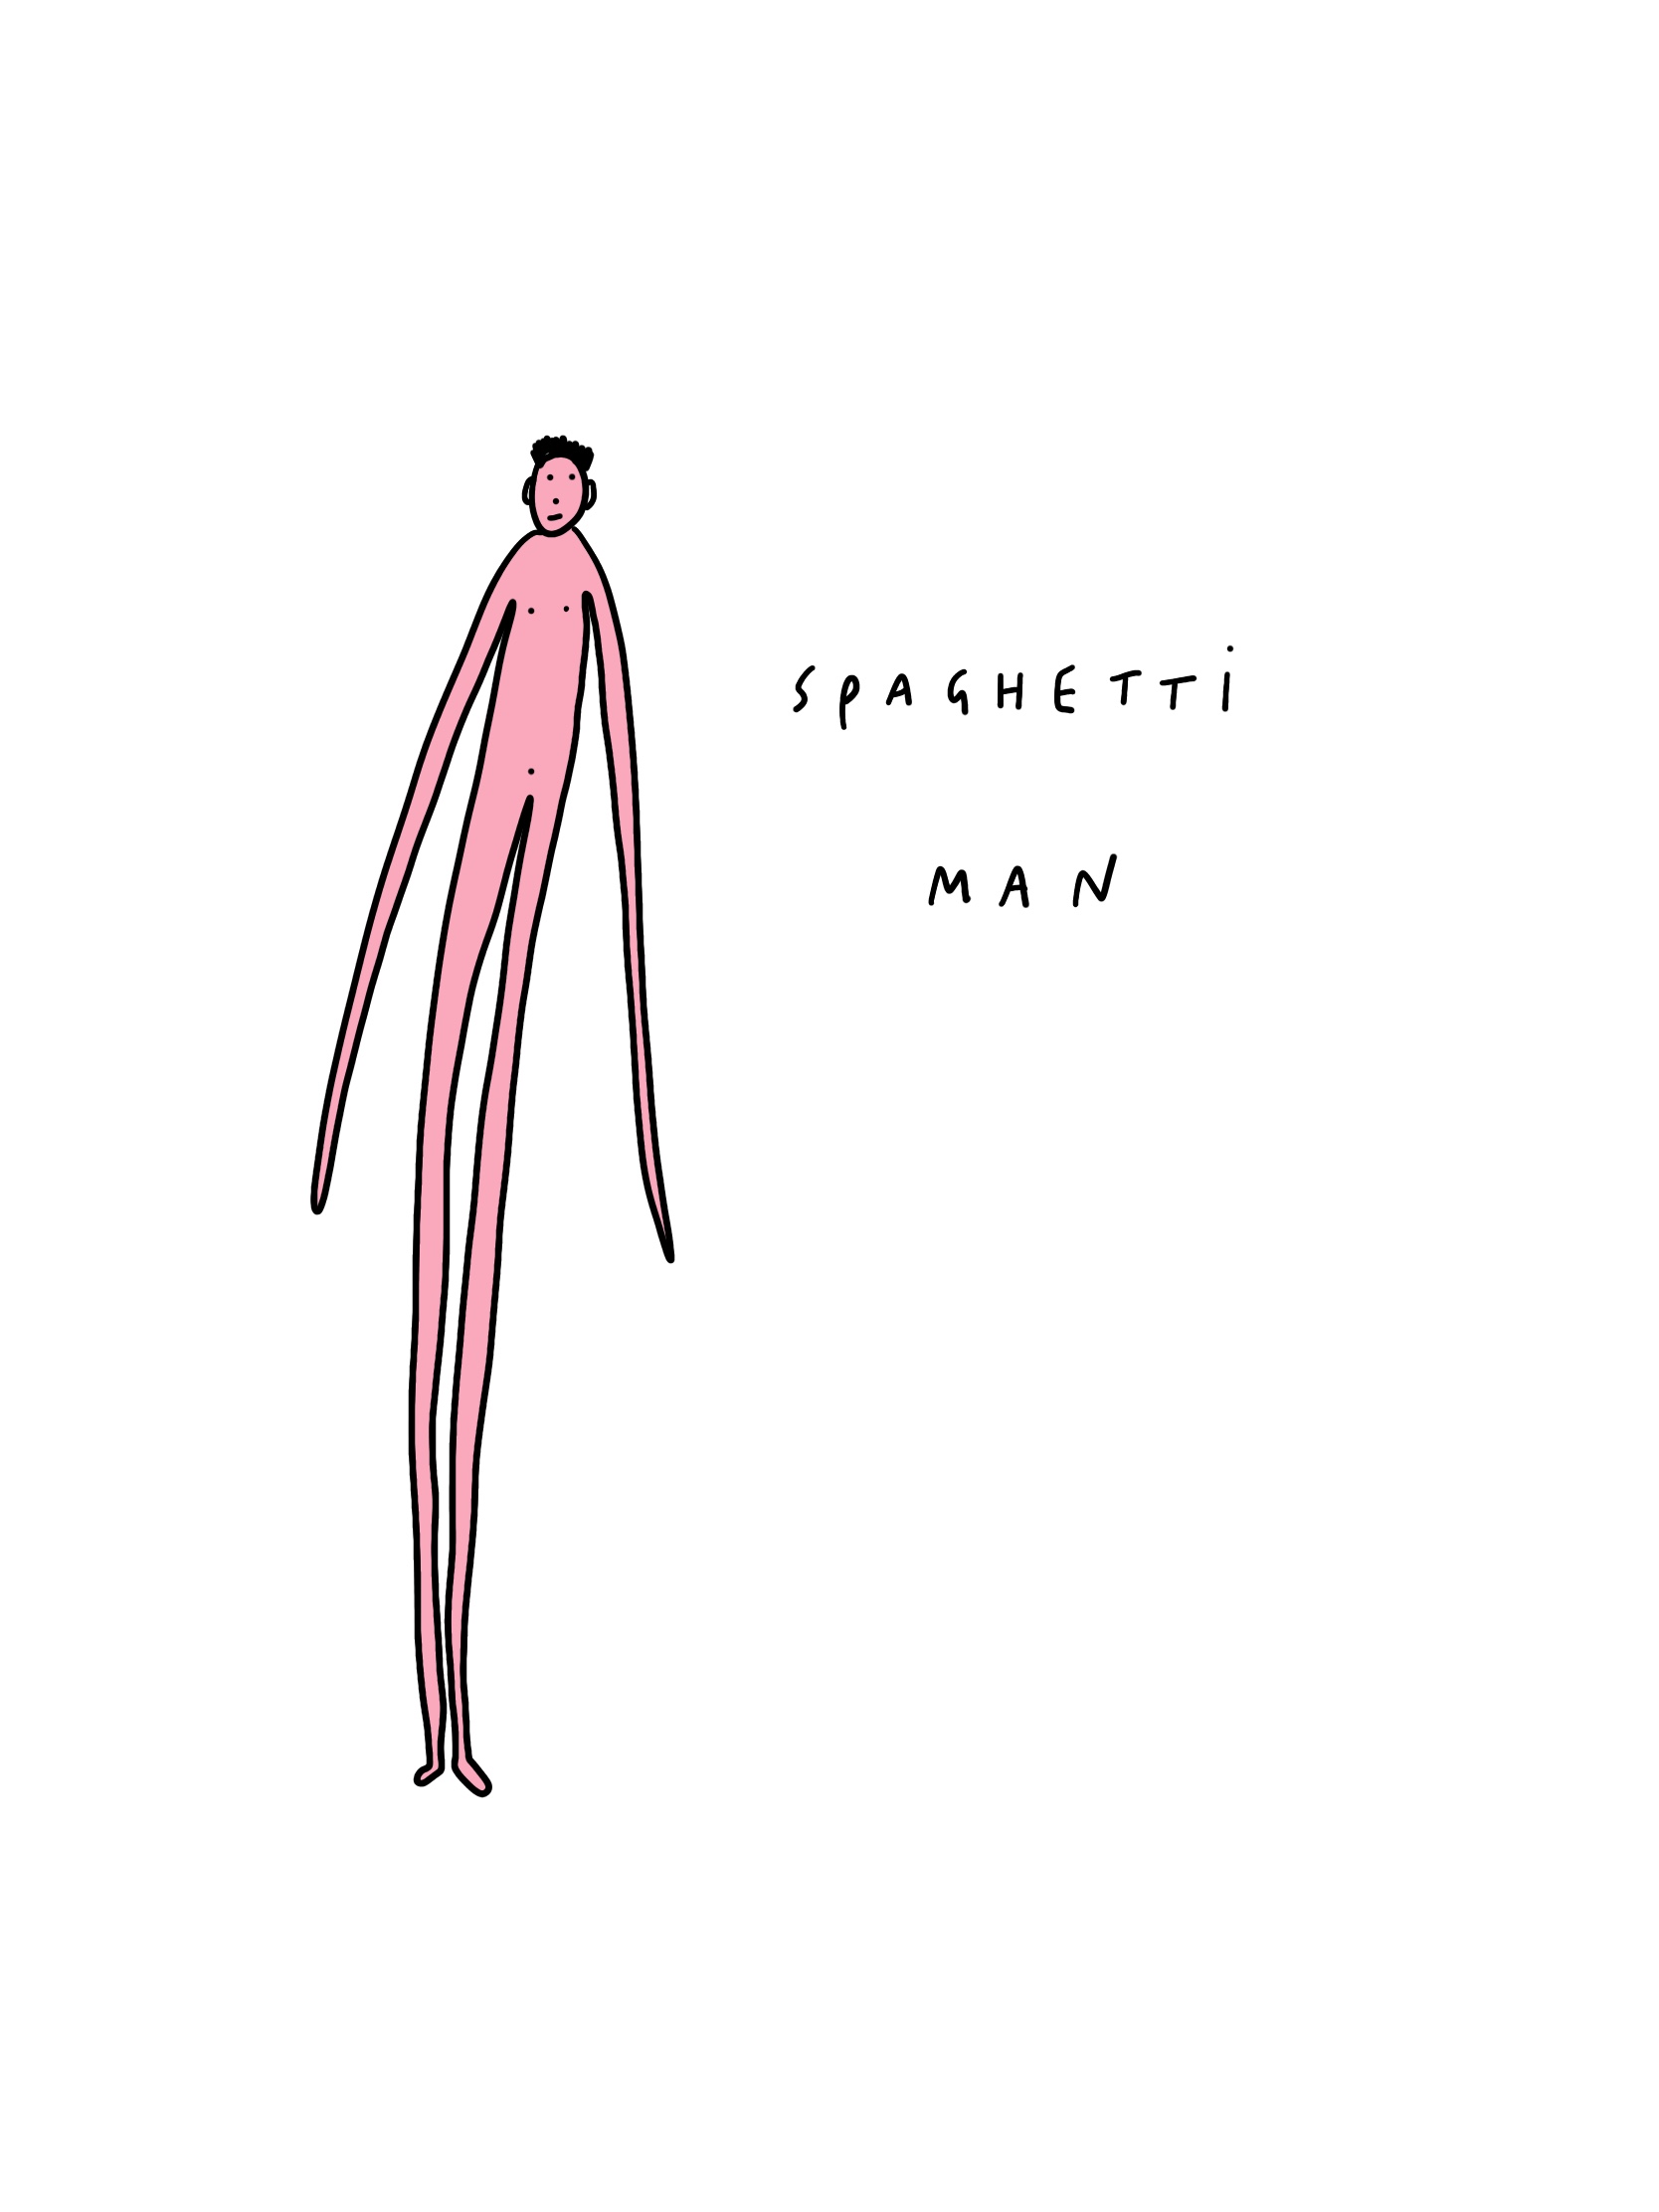 Shuturp Artwork Spaghetti Man Drawing in Pink